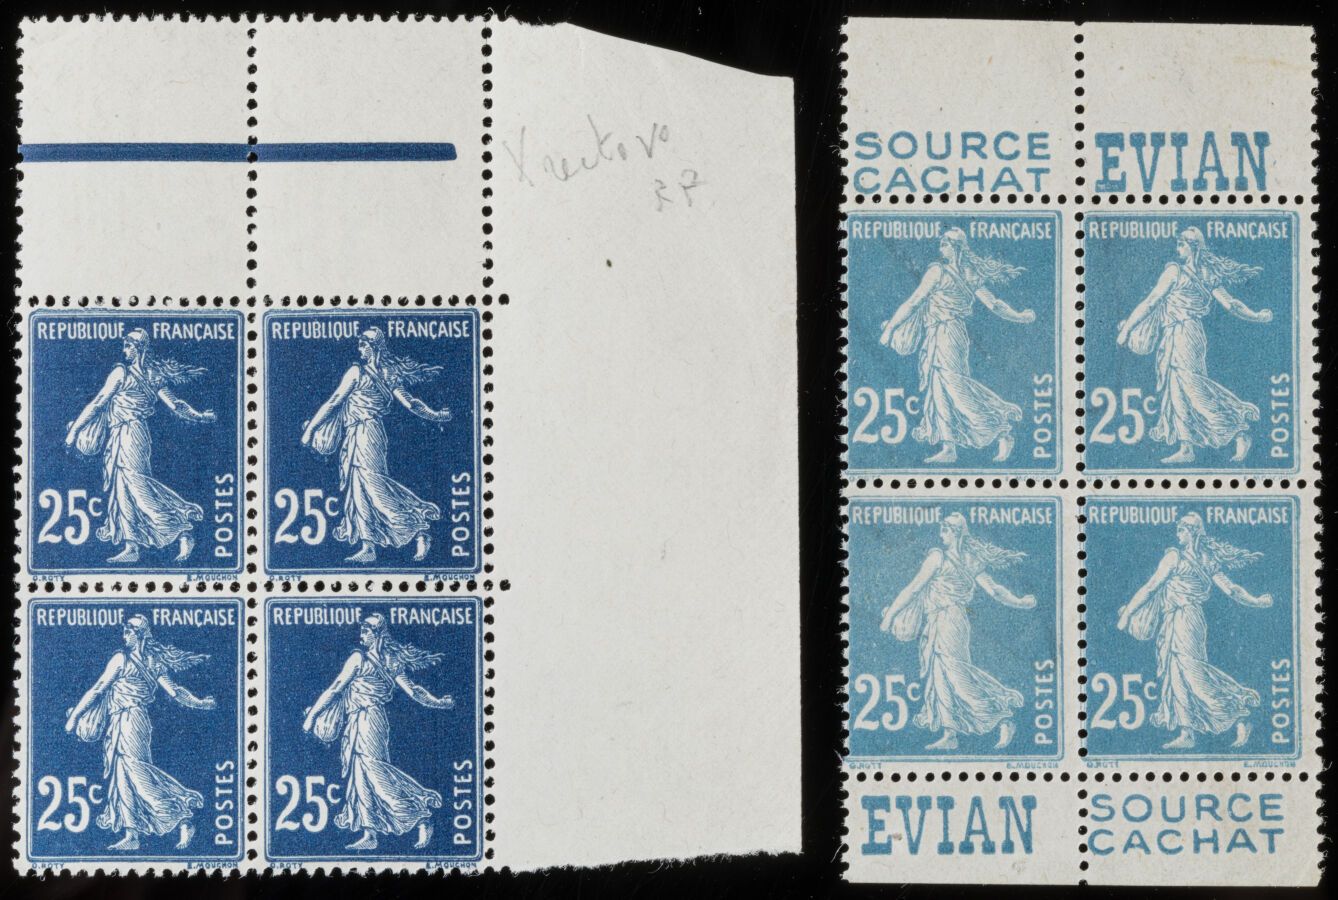 Null Timbre N°140s - Bloc de 4 timbres avec Impression Recto-verso + Variété, en&hellip;